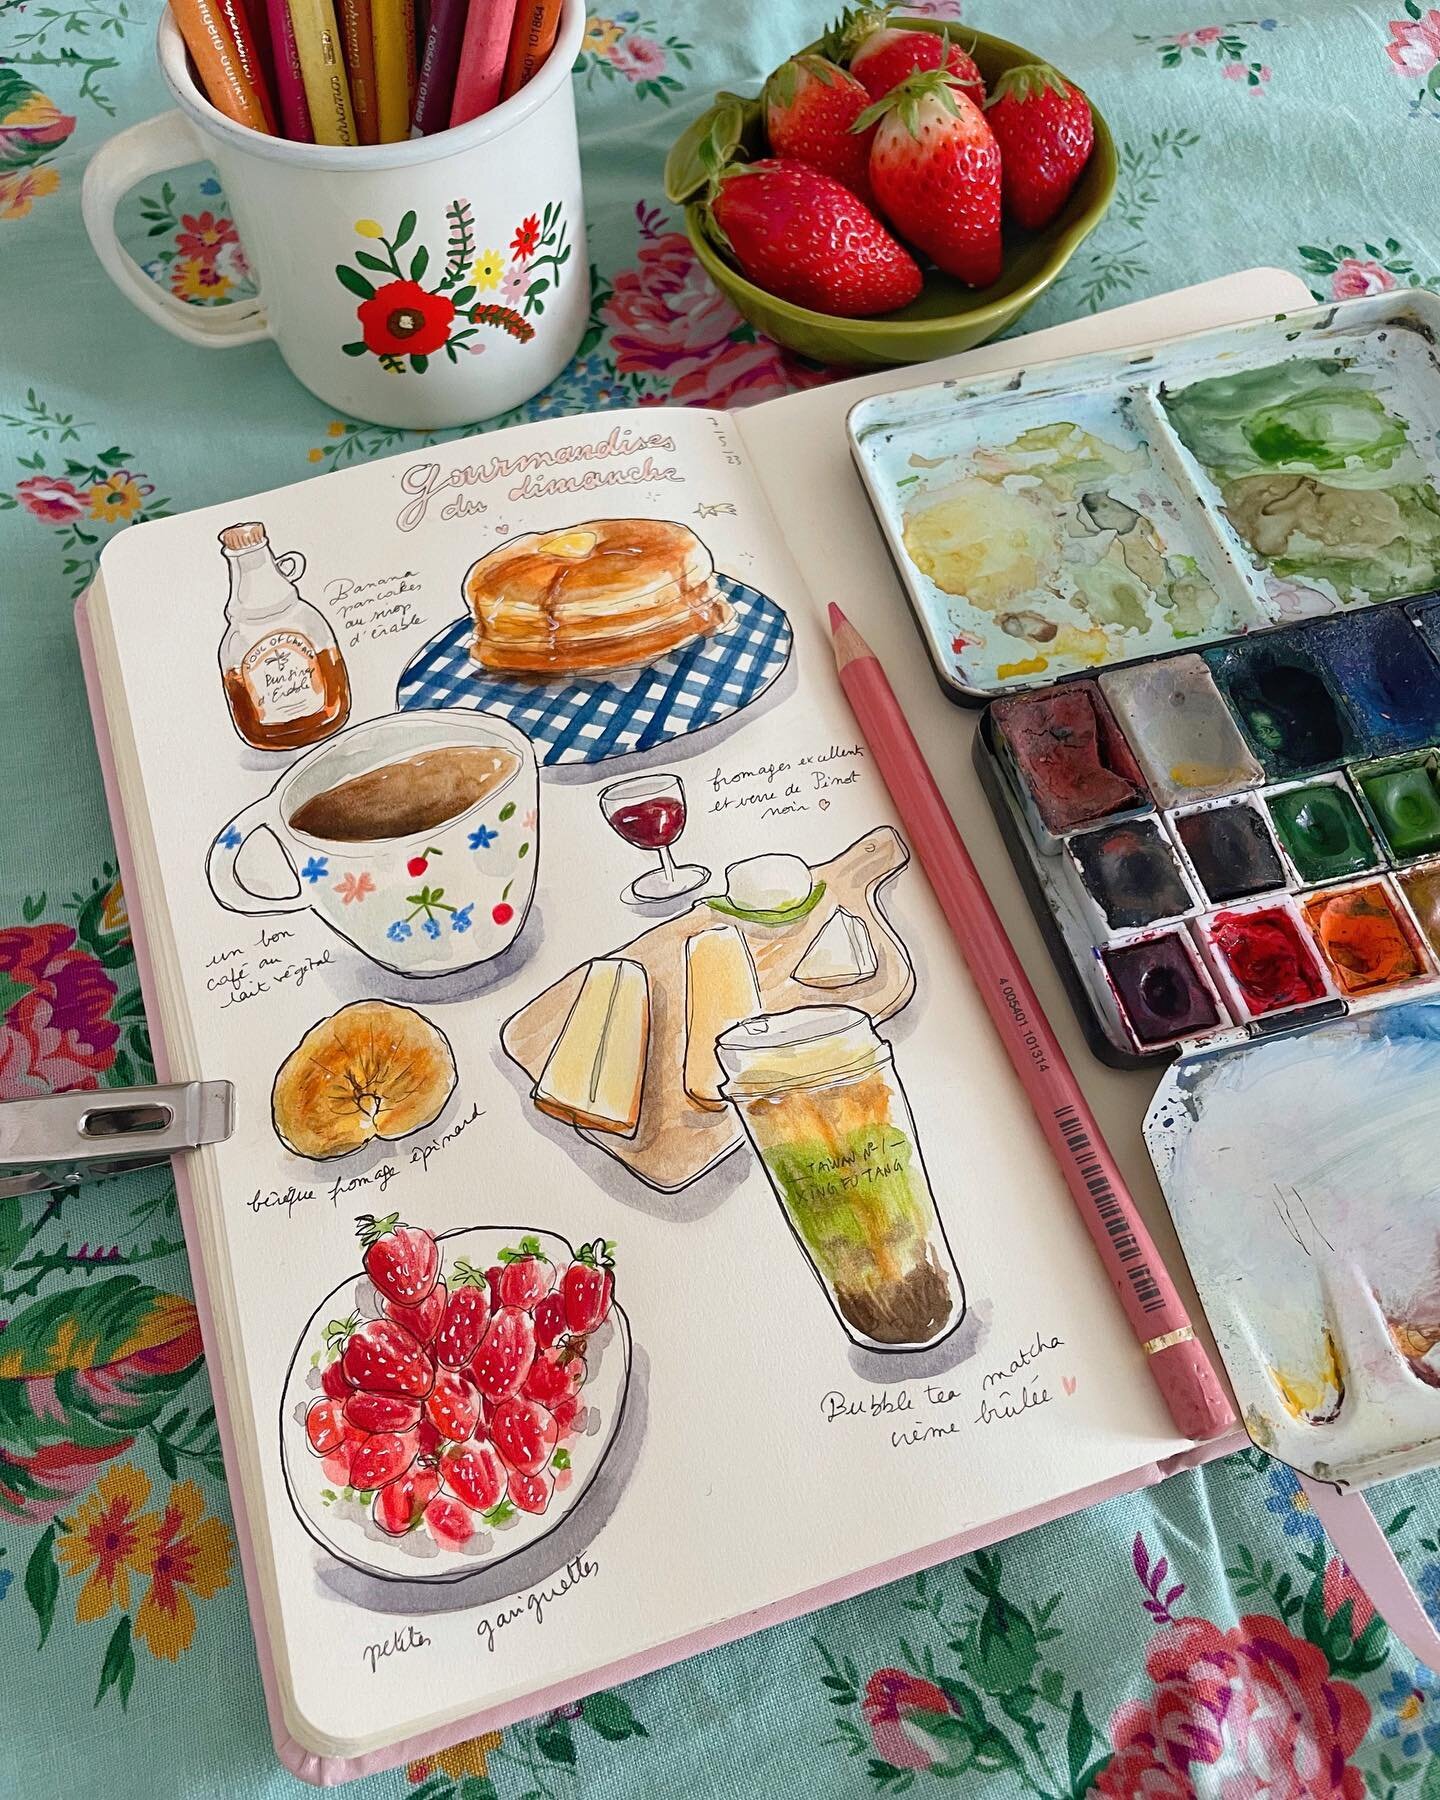 Les gourmandises du dimanche 🧀🥞🍓🧋
.
.
#aquarelle #sketchbook #watercolorsketchbook #watercolorfood #illustration #sketchbookpage